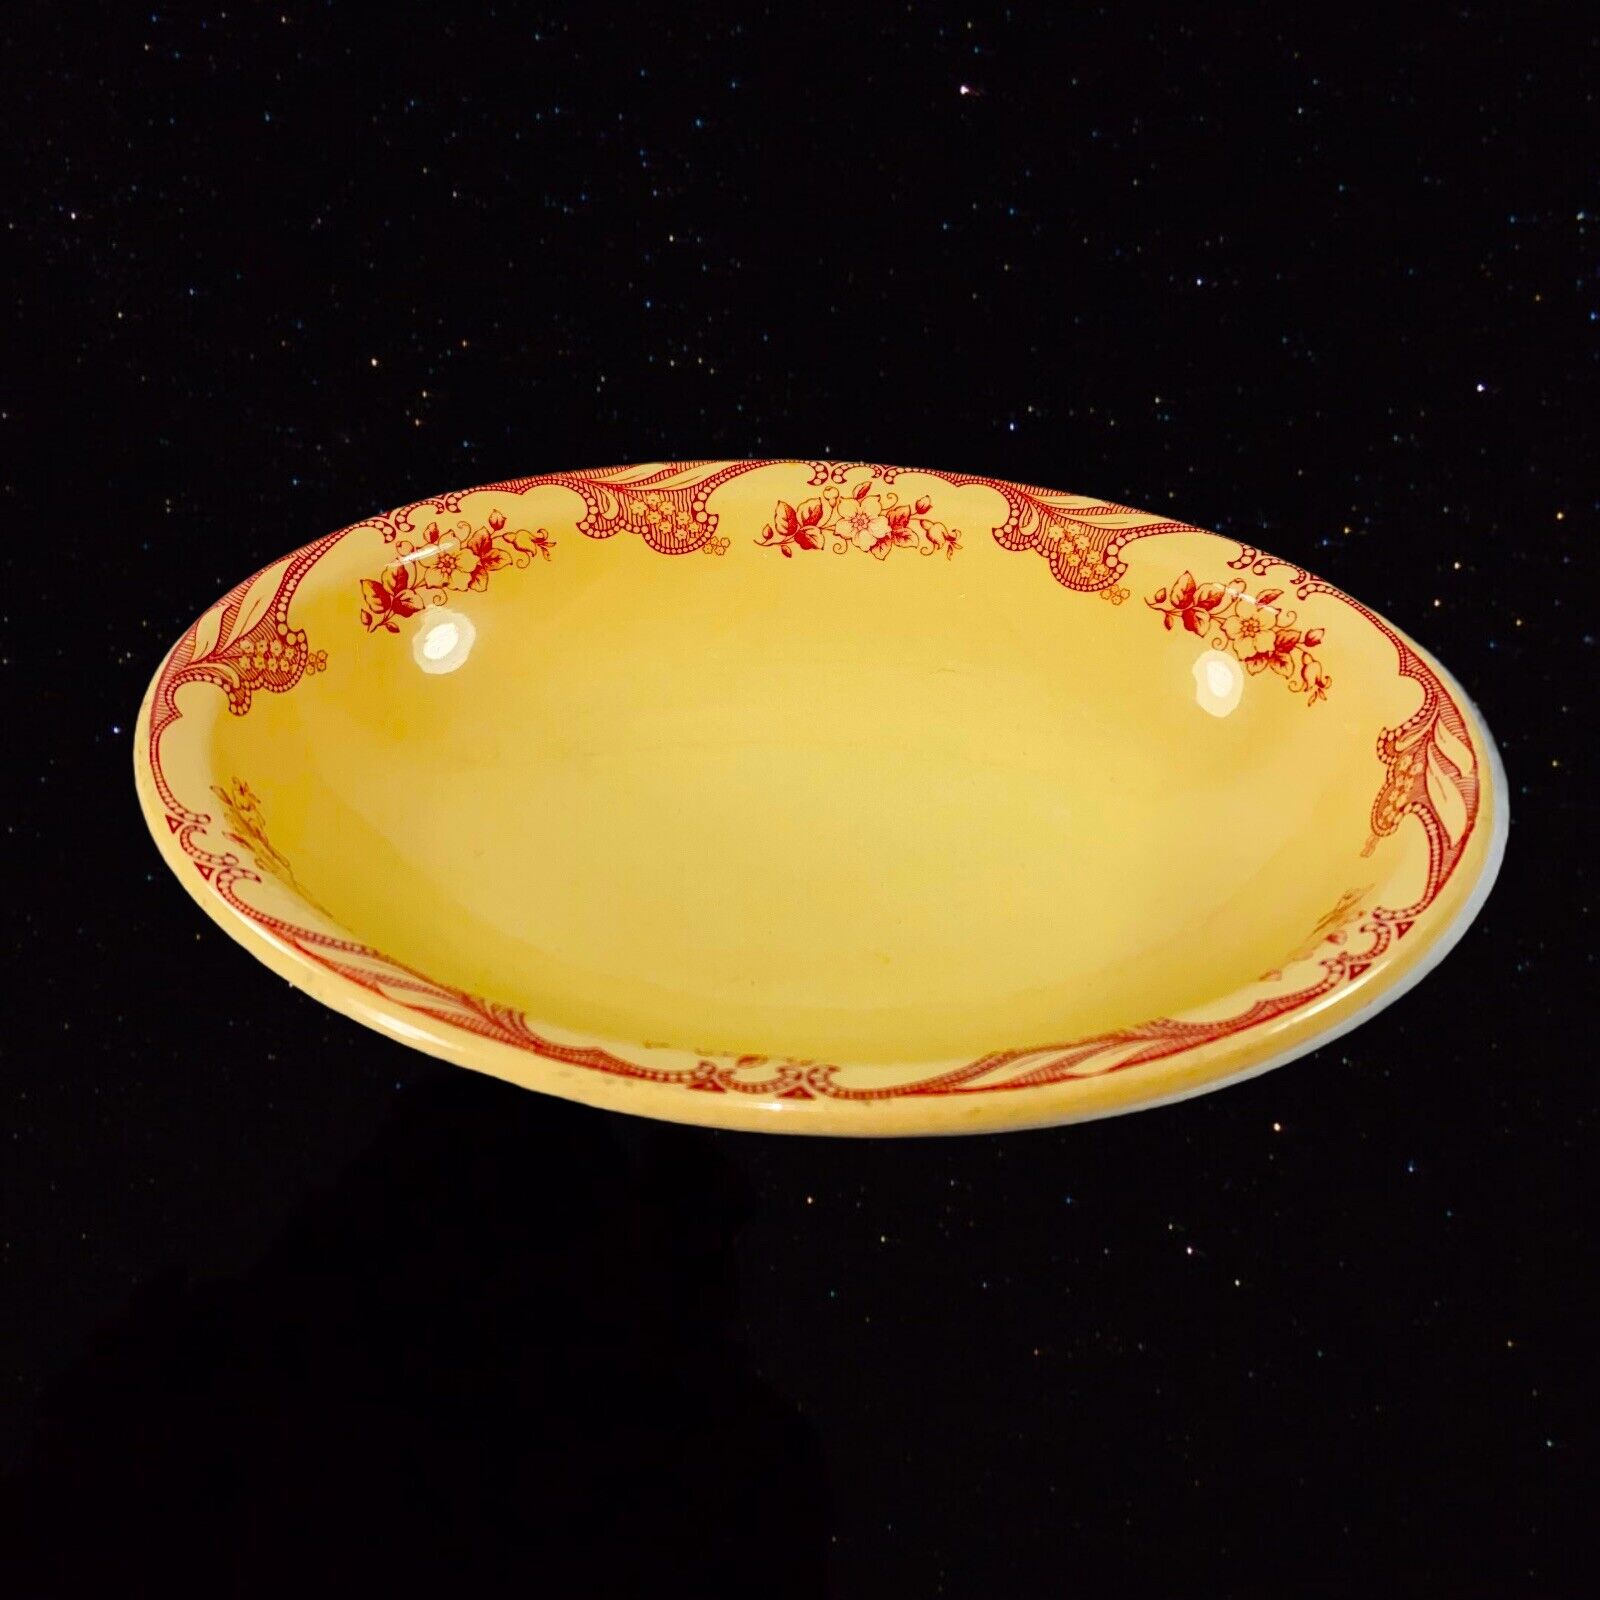 Vintage Inca Ware Shenango China Serving Platter Floral Border USA Bowl 7.5”D